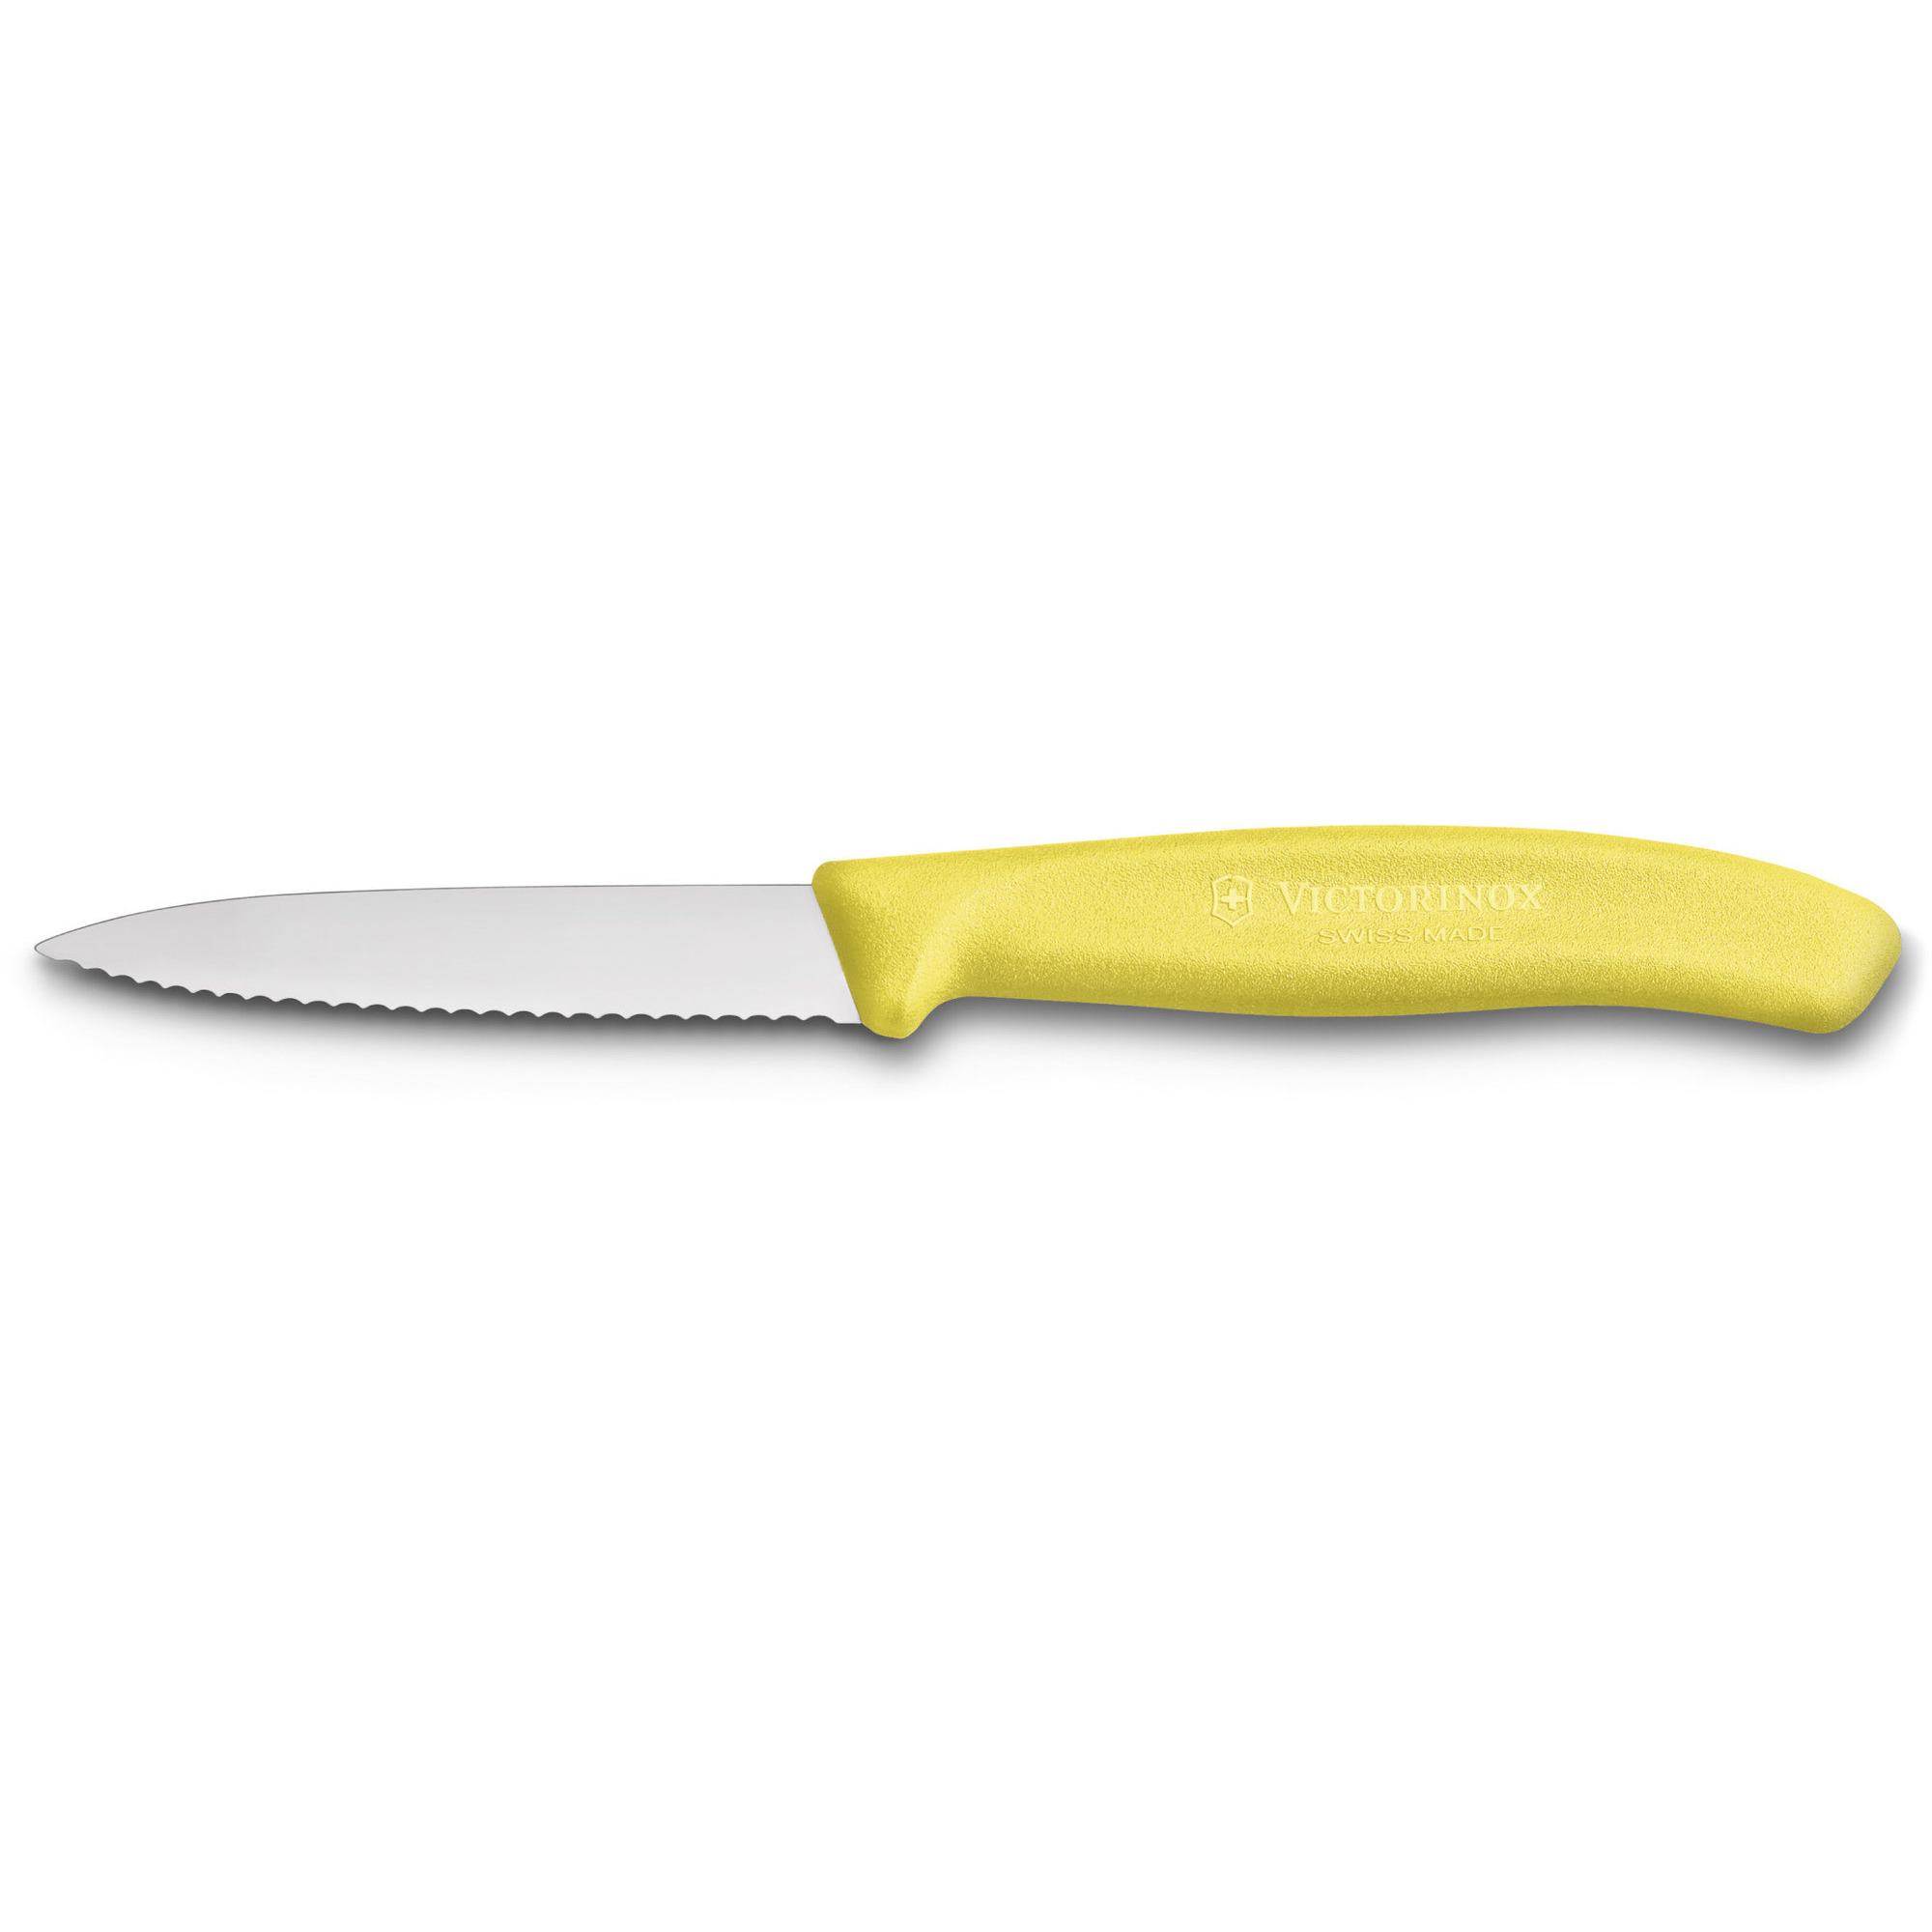 Victorinox Takket urtekniv med nylonskæfte, 8 cm., gul